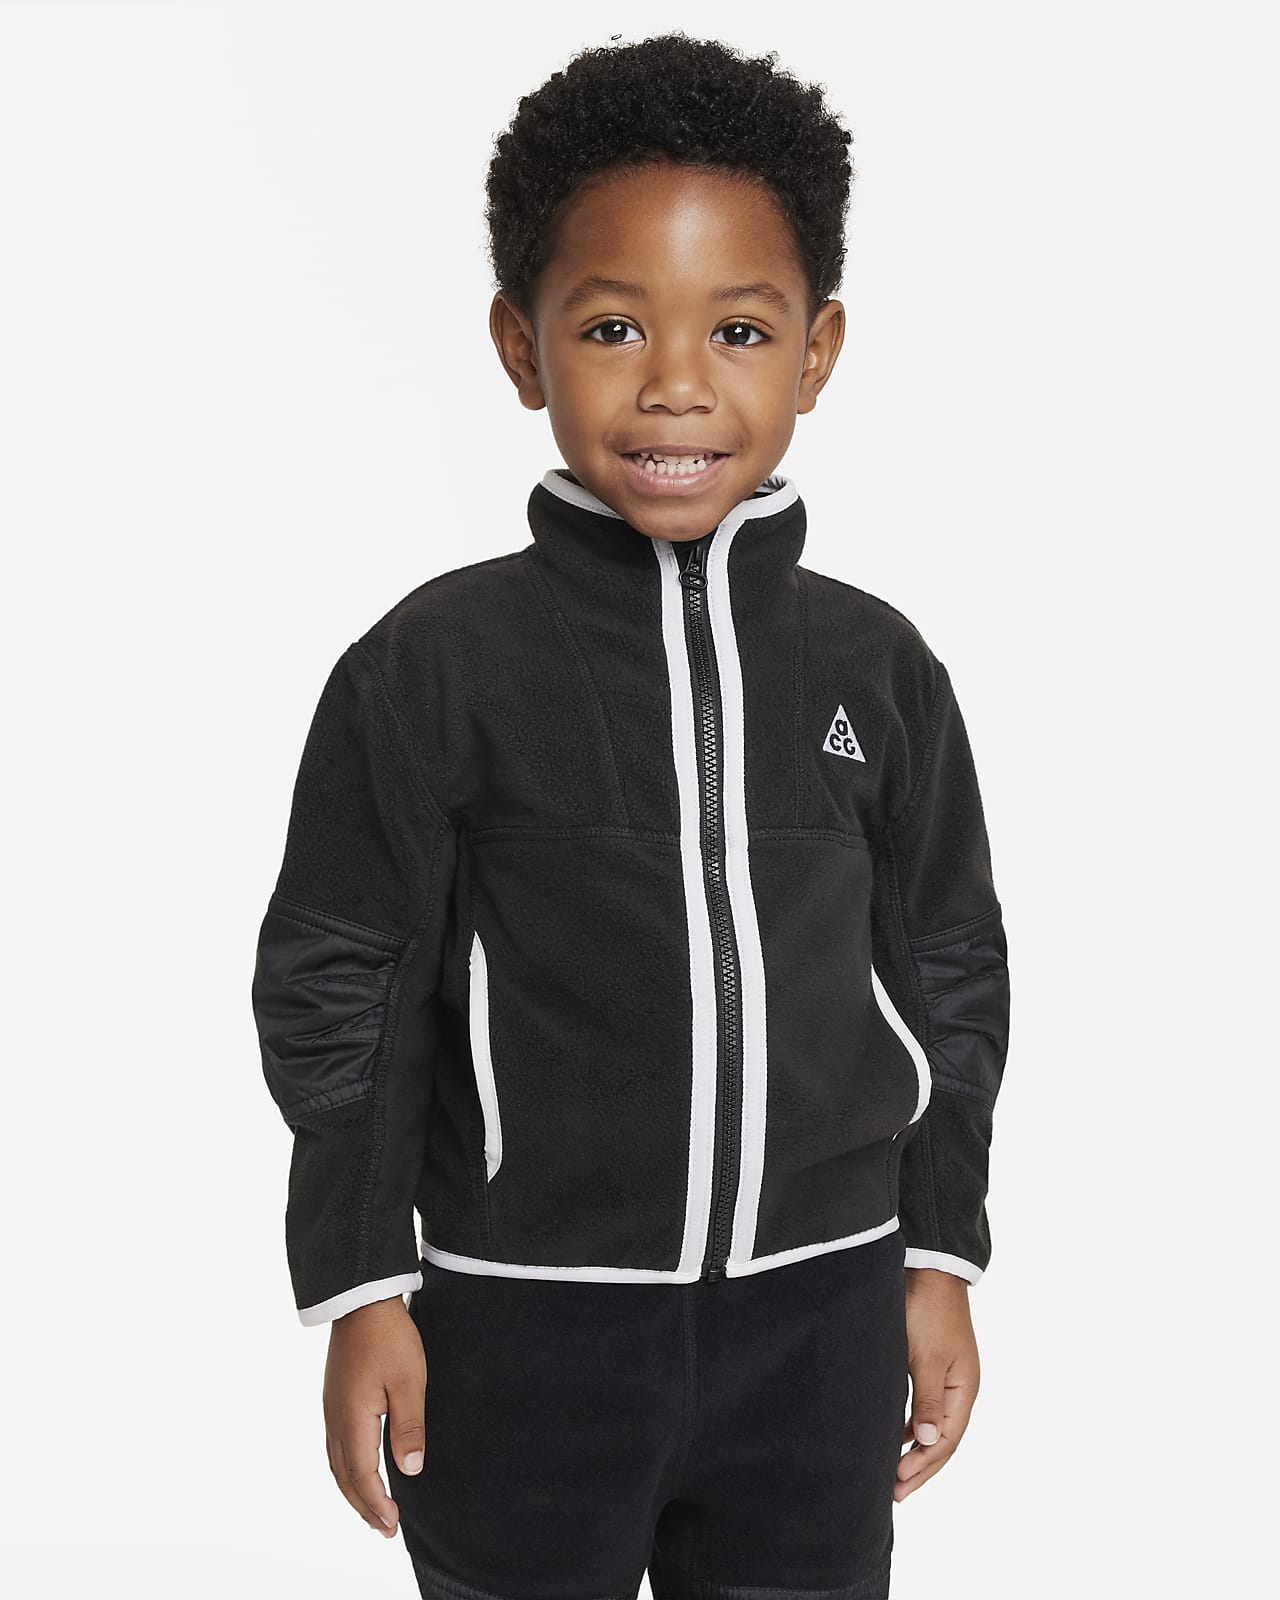 Kids Boy's Full Zip Polar Fleece Jacket, Ultra Soft, Warm